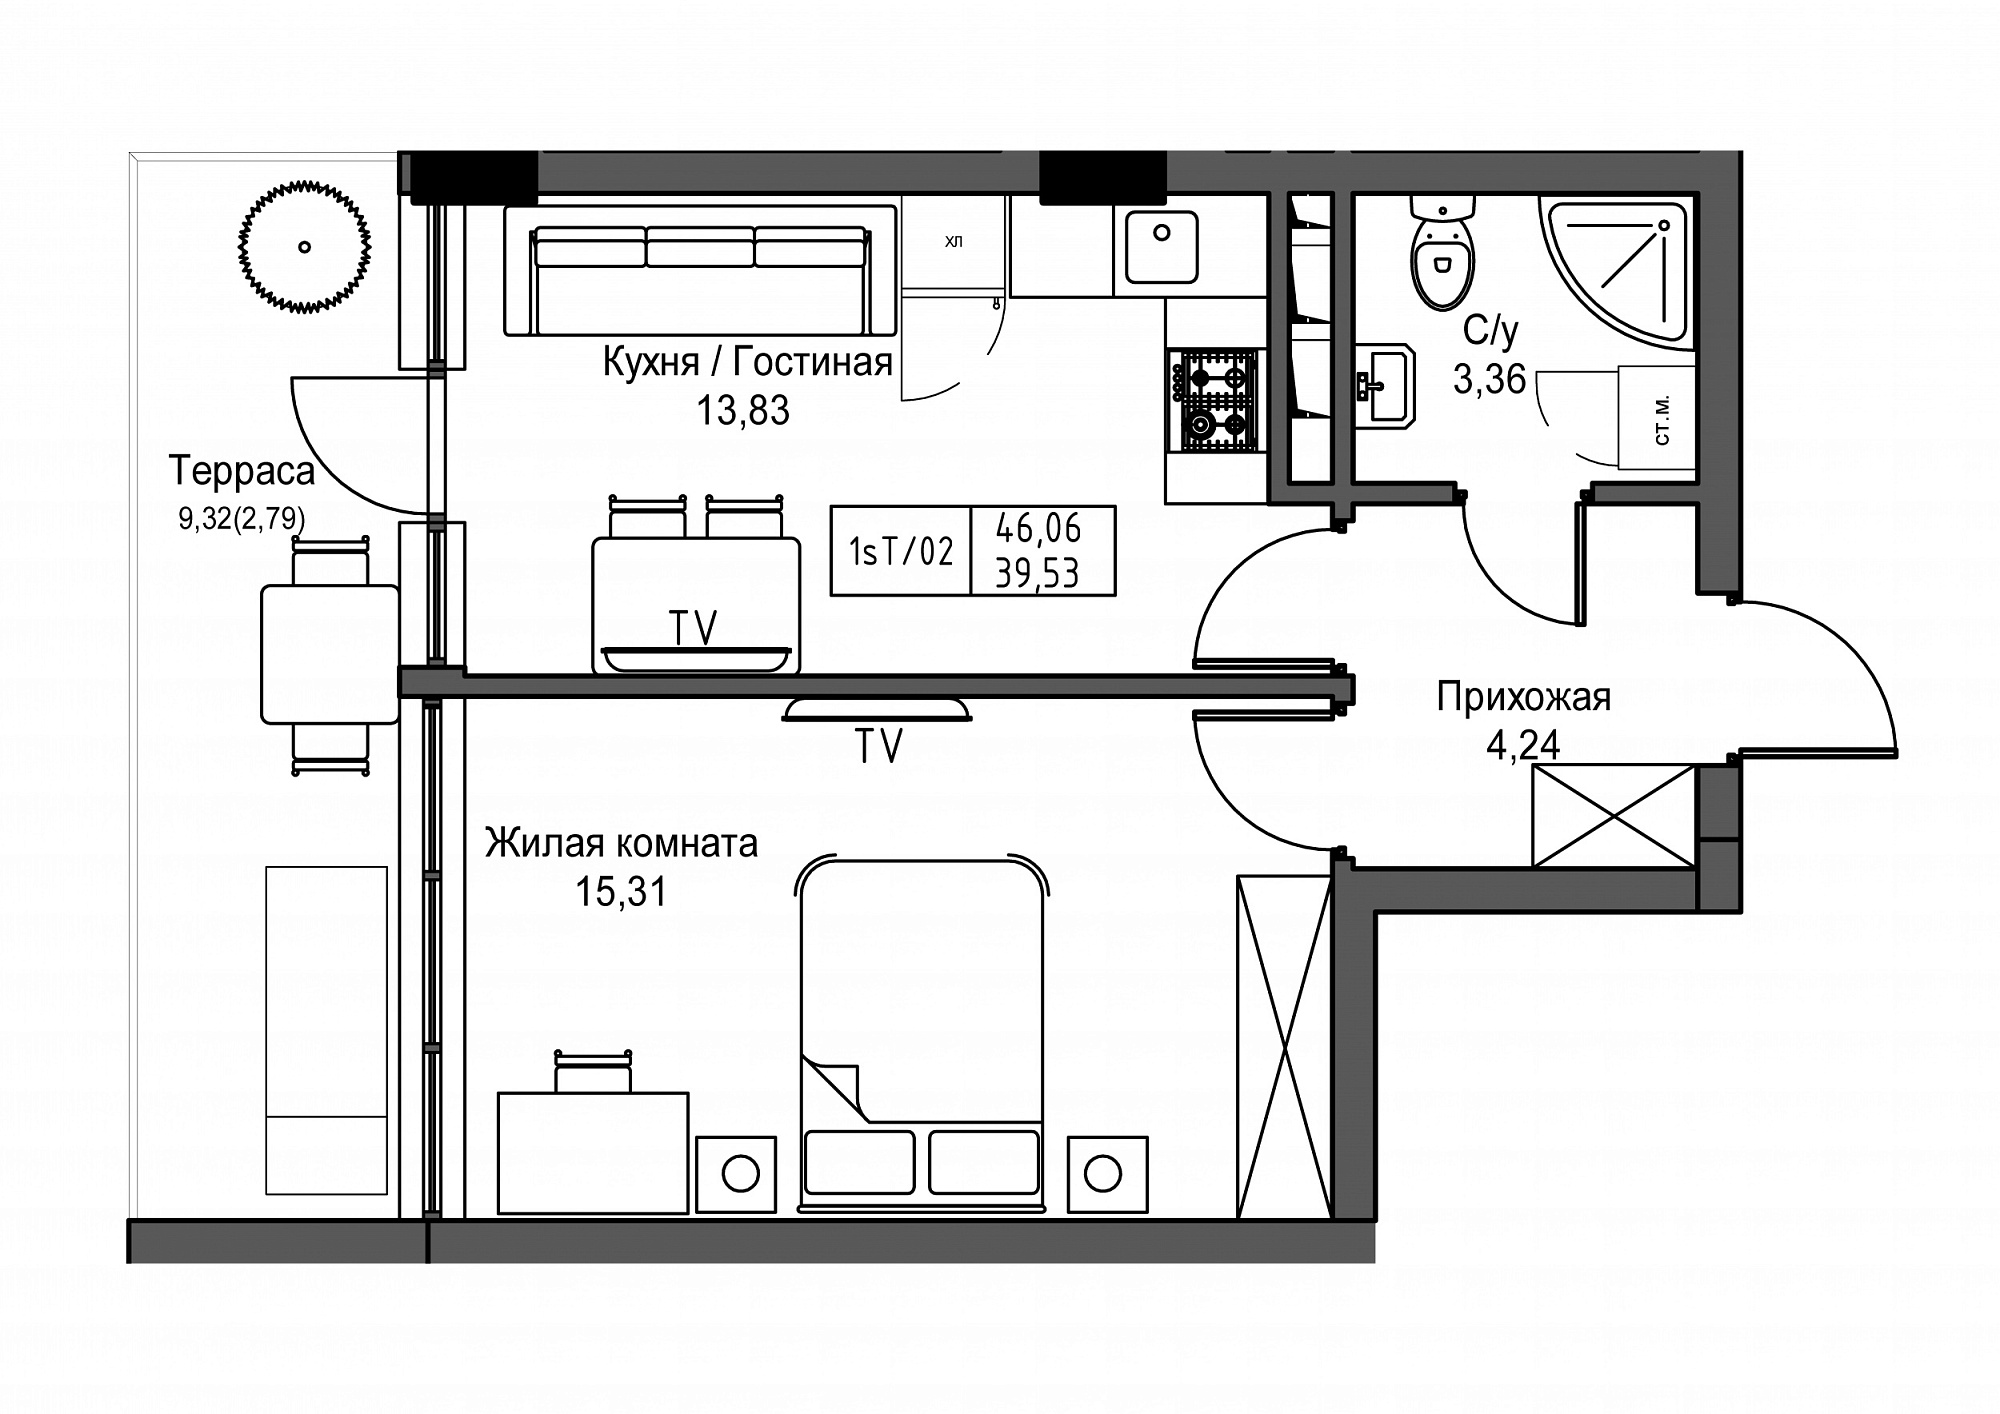 Планування 1-к квартира площею 39.53м2, UM-003-02/0010.